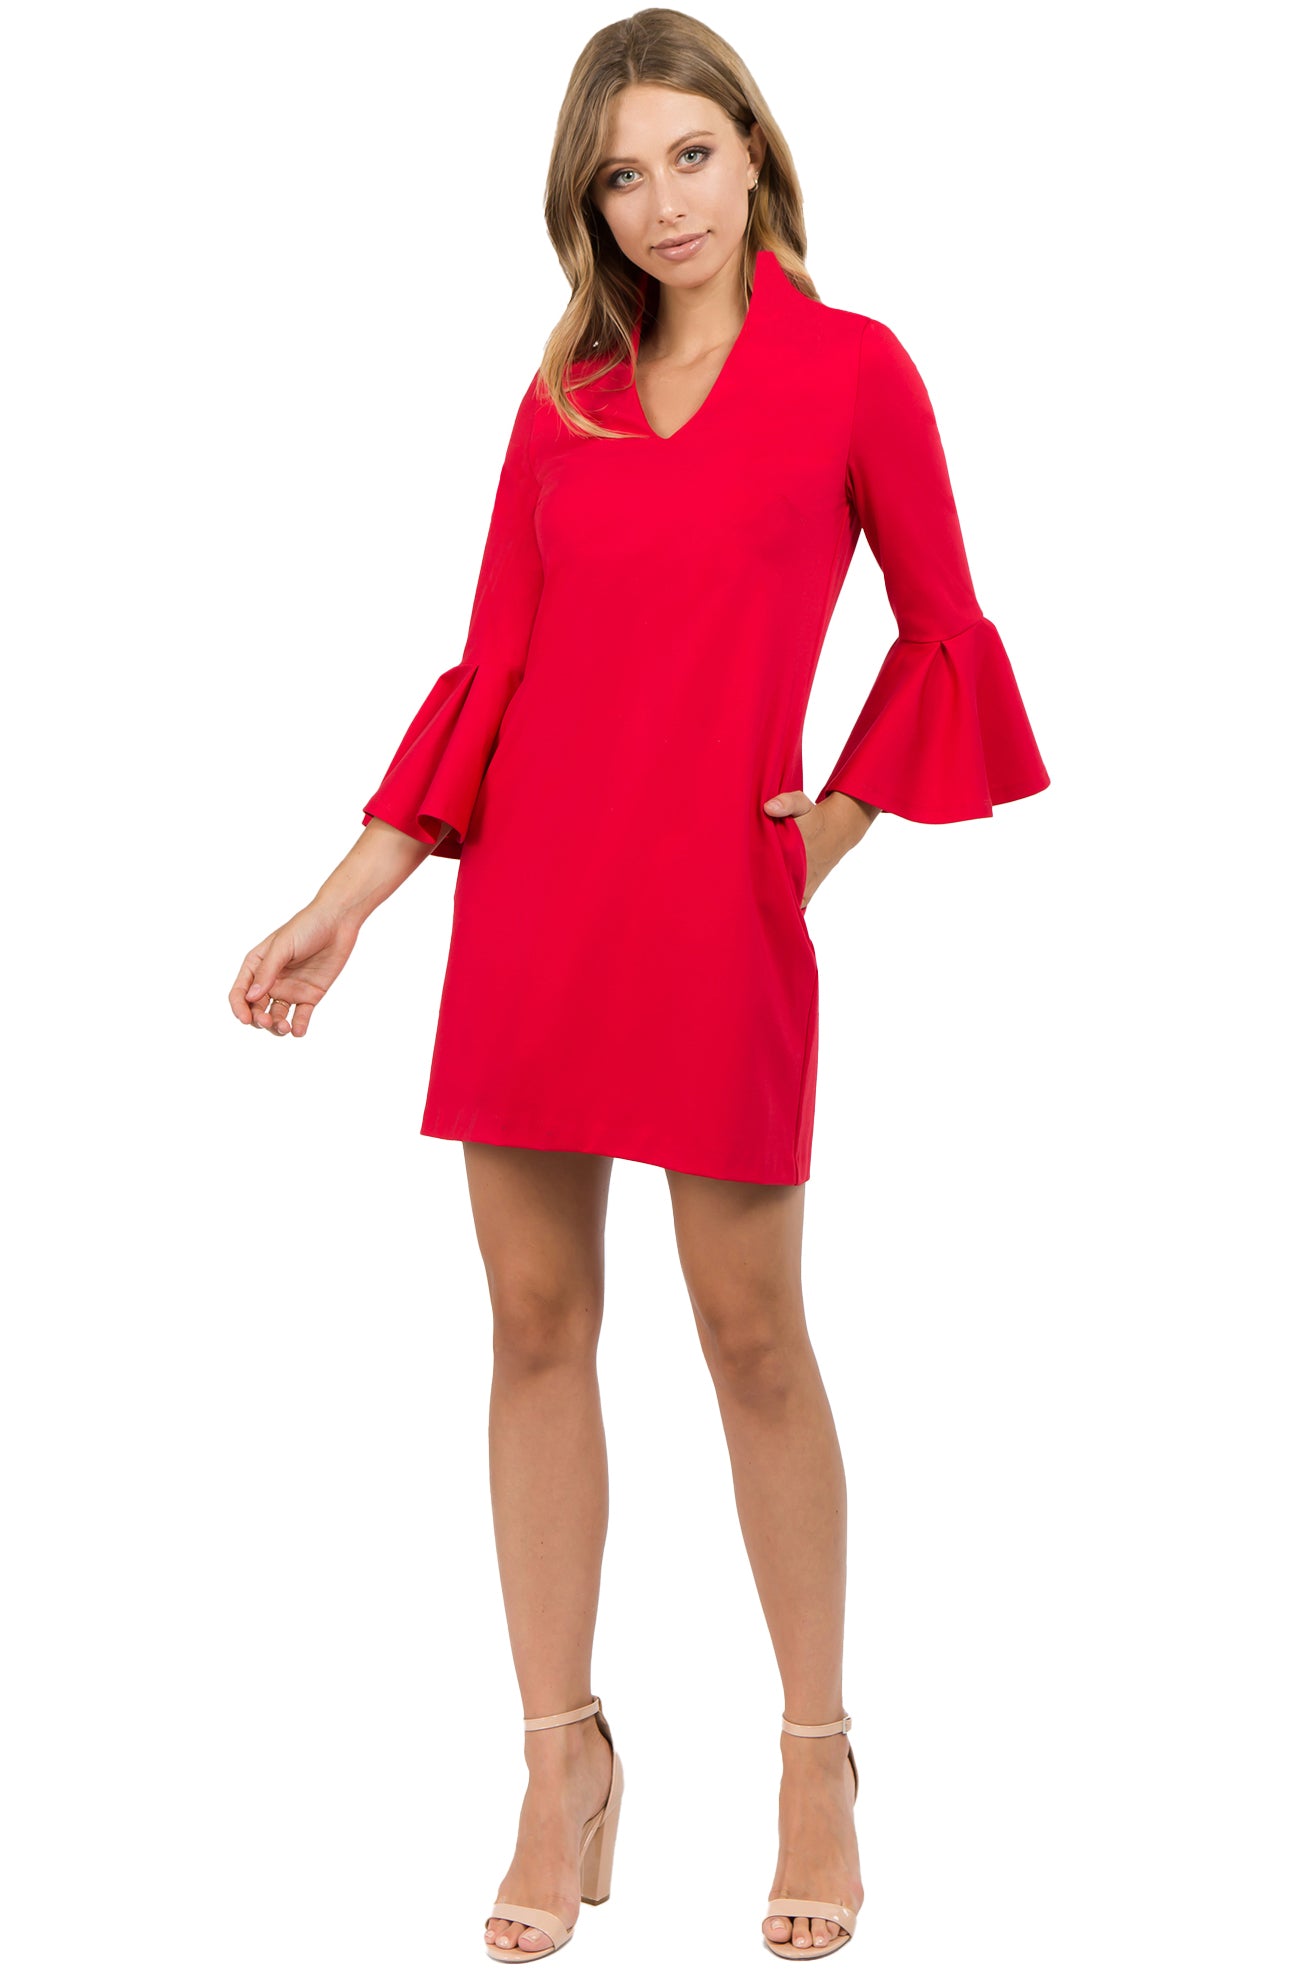 Model wearing red knit Ponte mini shift dress with v-neckline, 3/4 bell sleeves and side slit pockets.